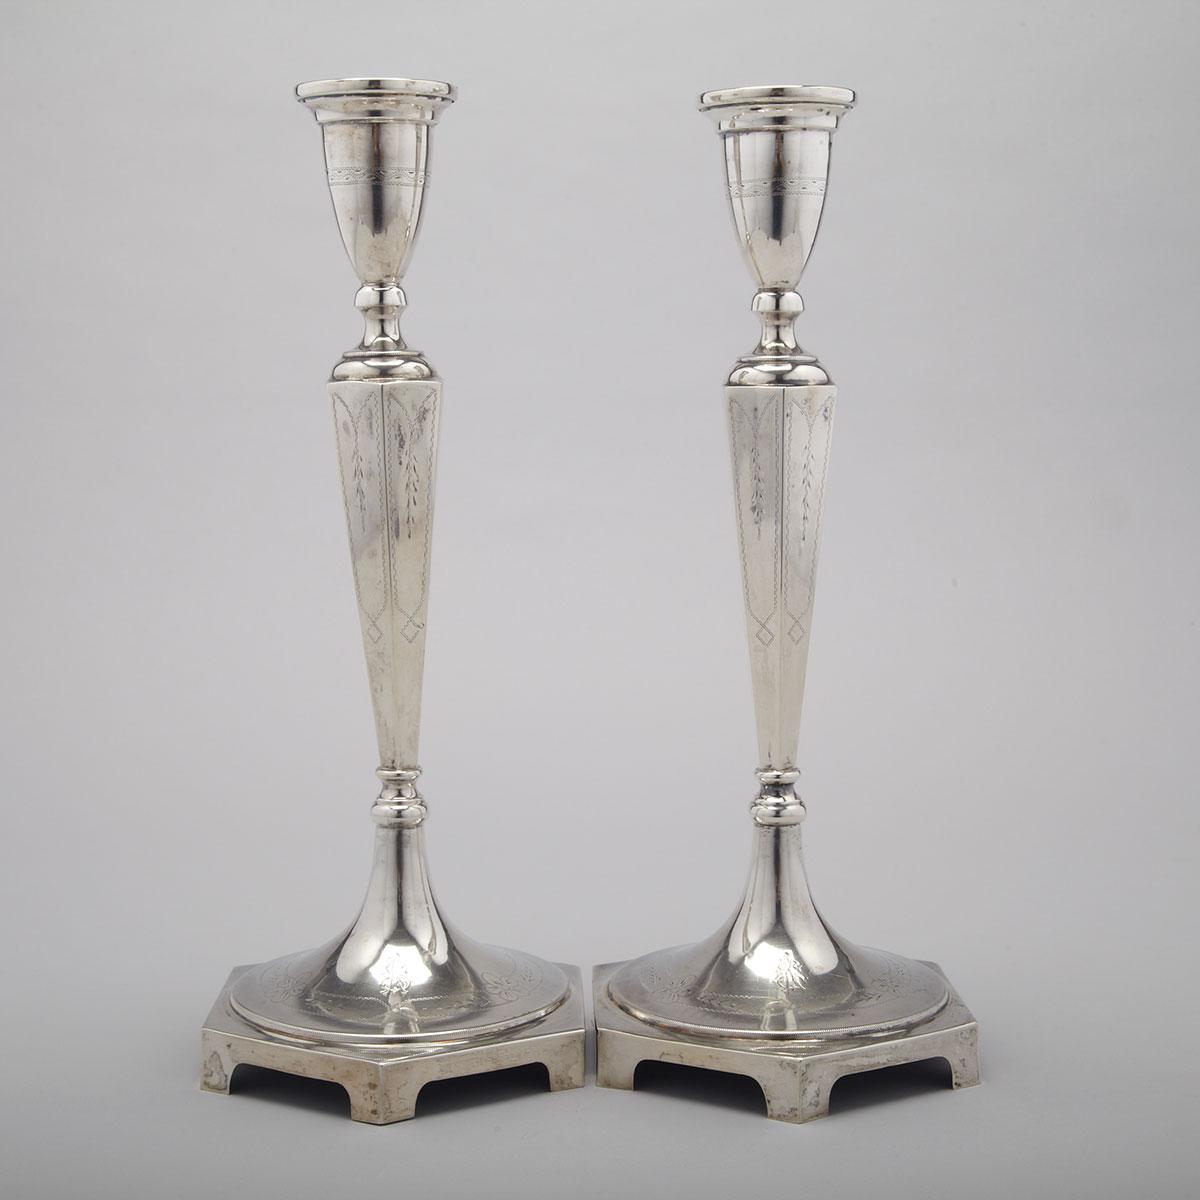 Pair of Polish Silver Table Candlesticks, Krakow, c.1920